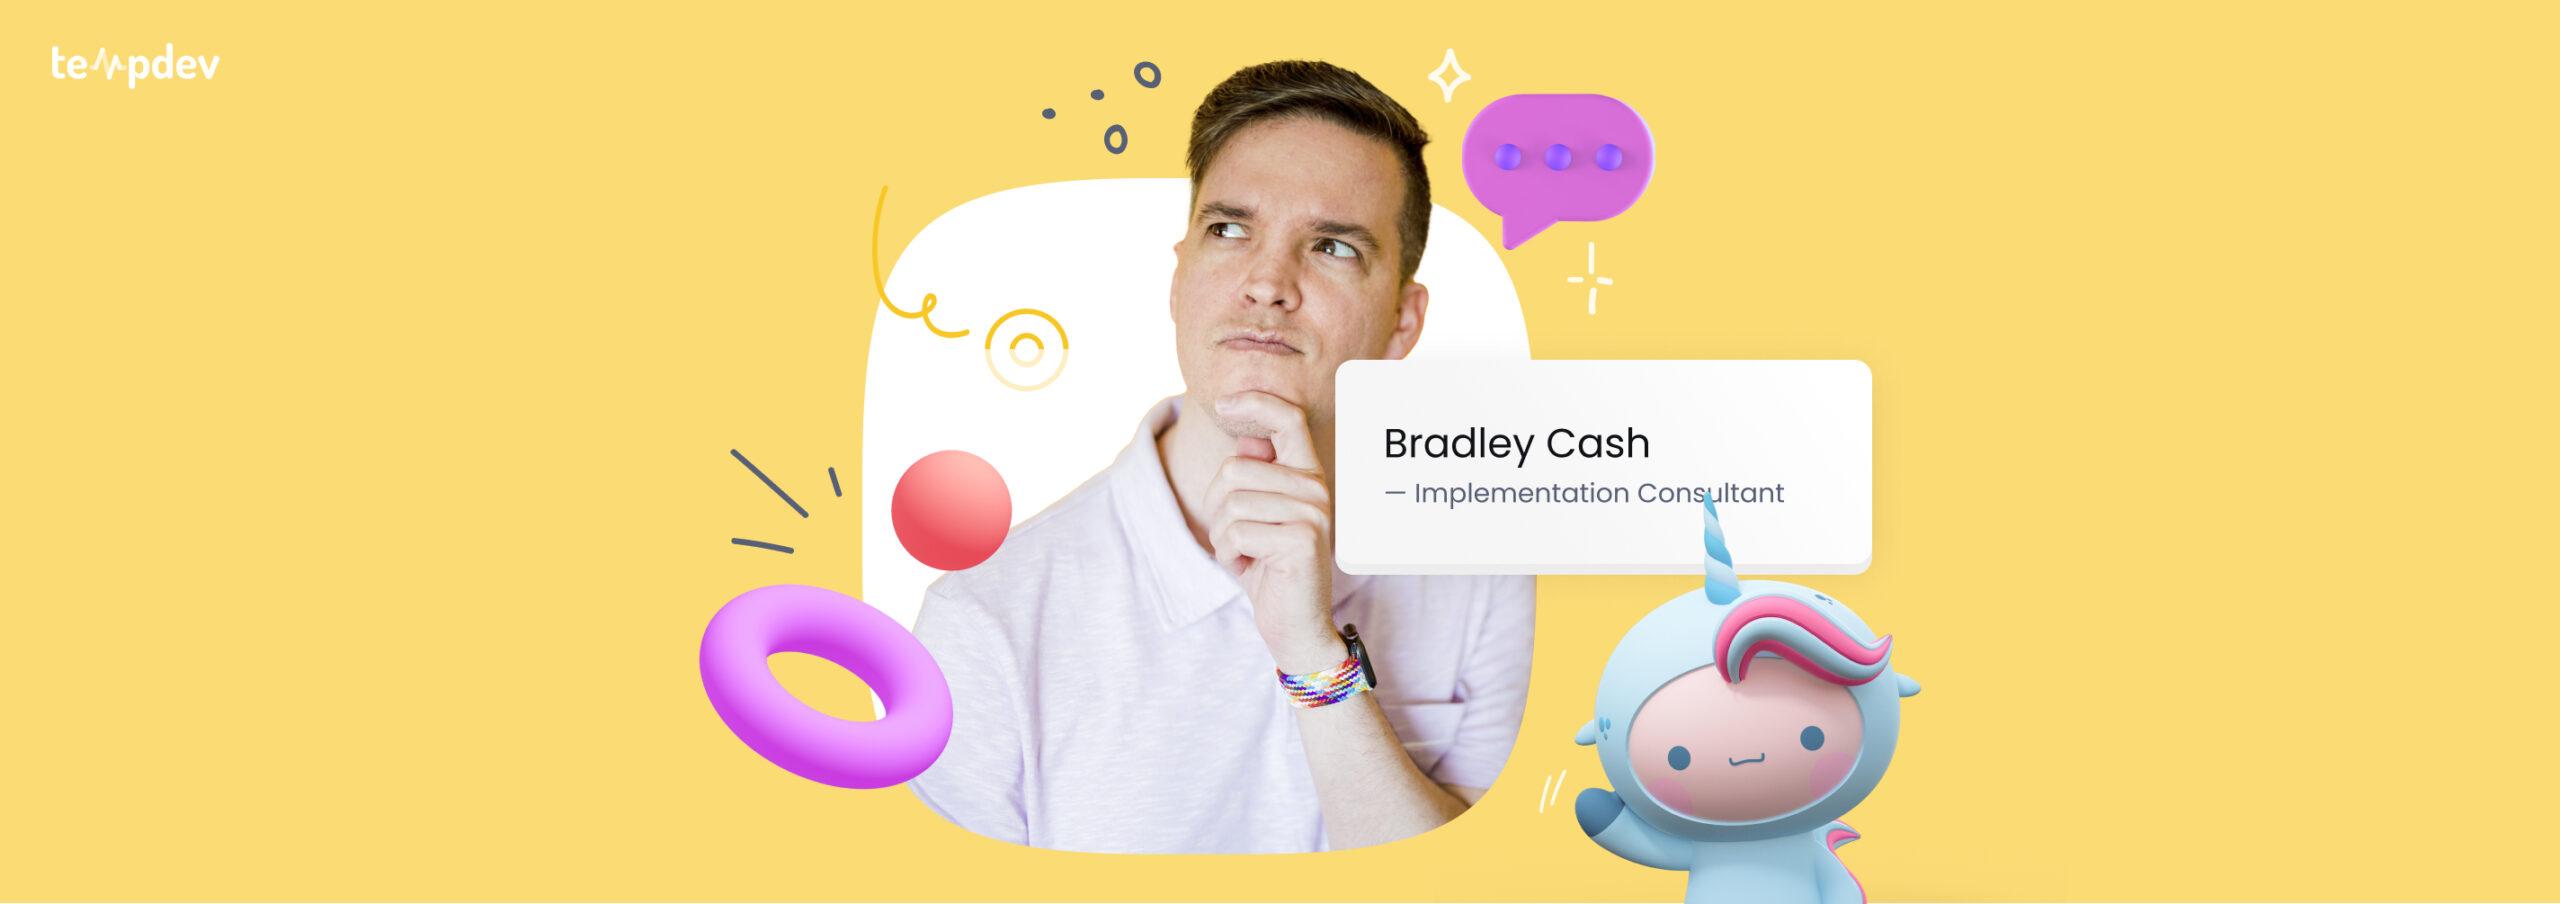 Meet Bradley Cash: NextGen Implementation Consultant